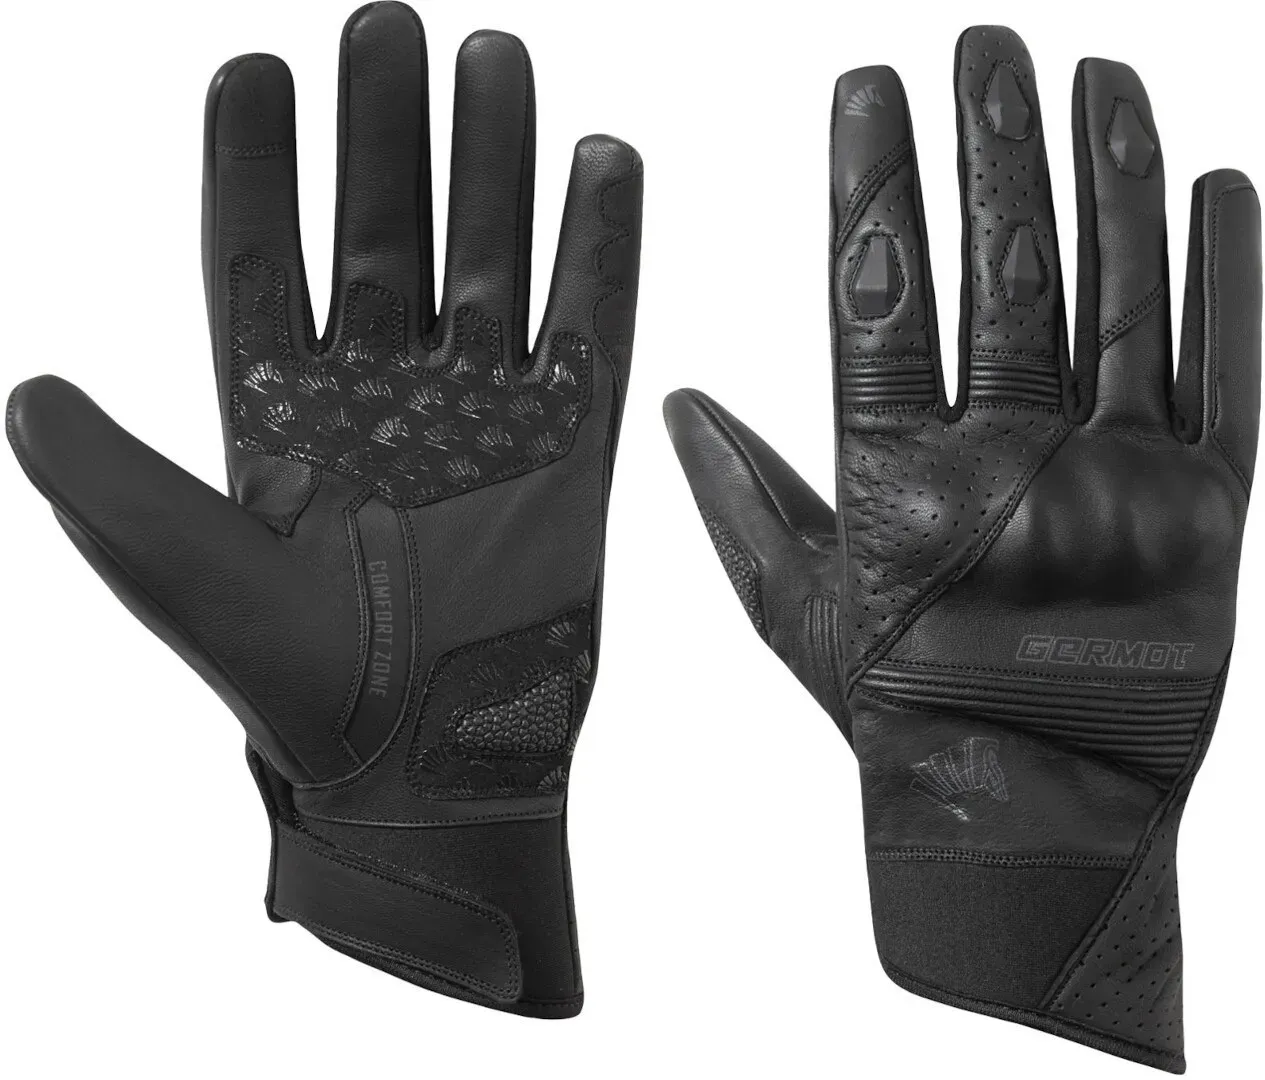 Germot Thompson Motorfiets handschoenen, zwart, L